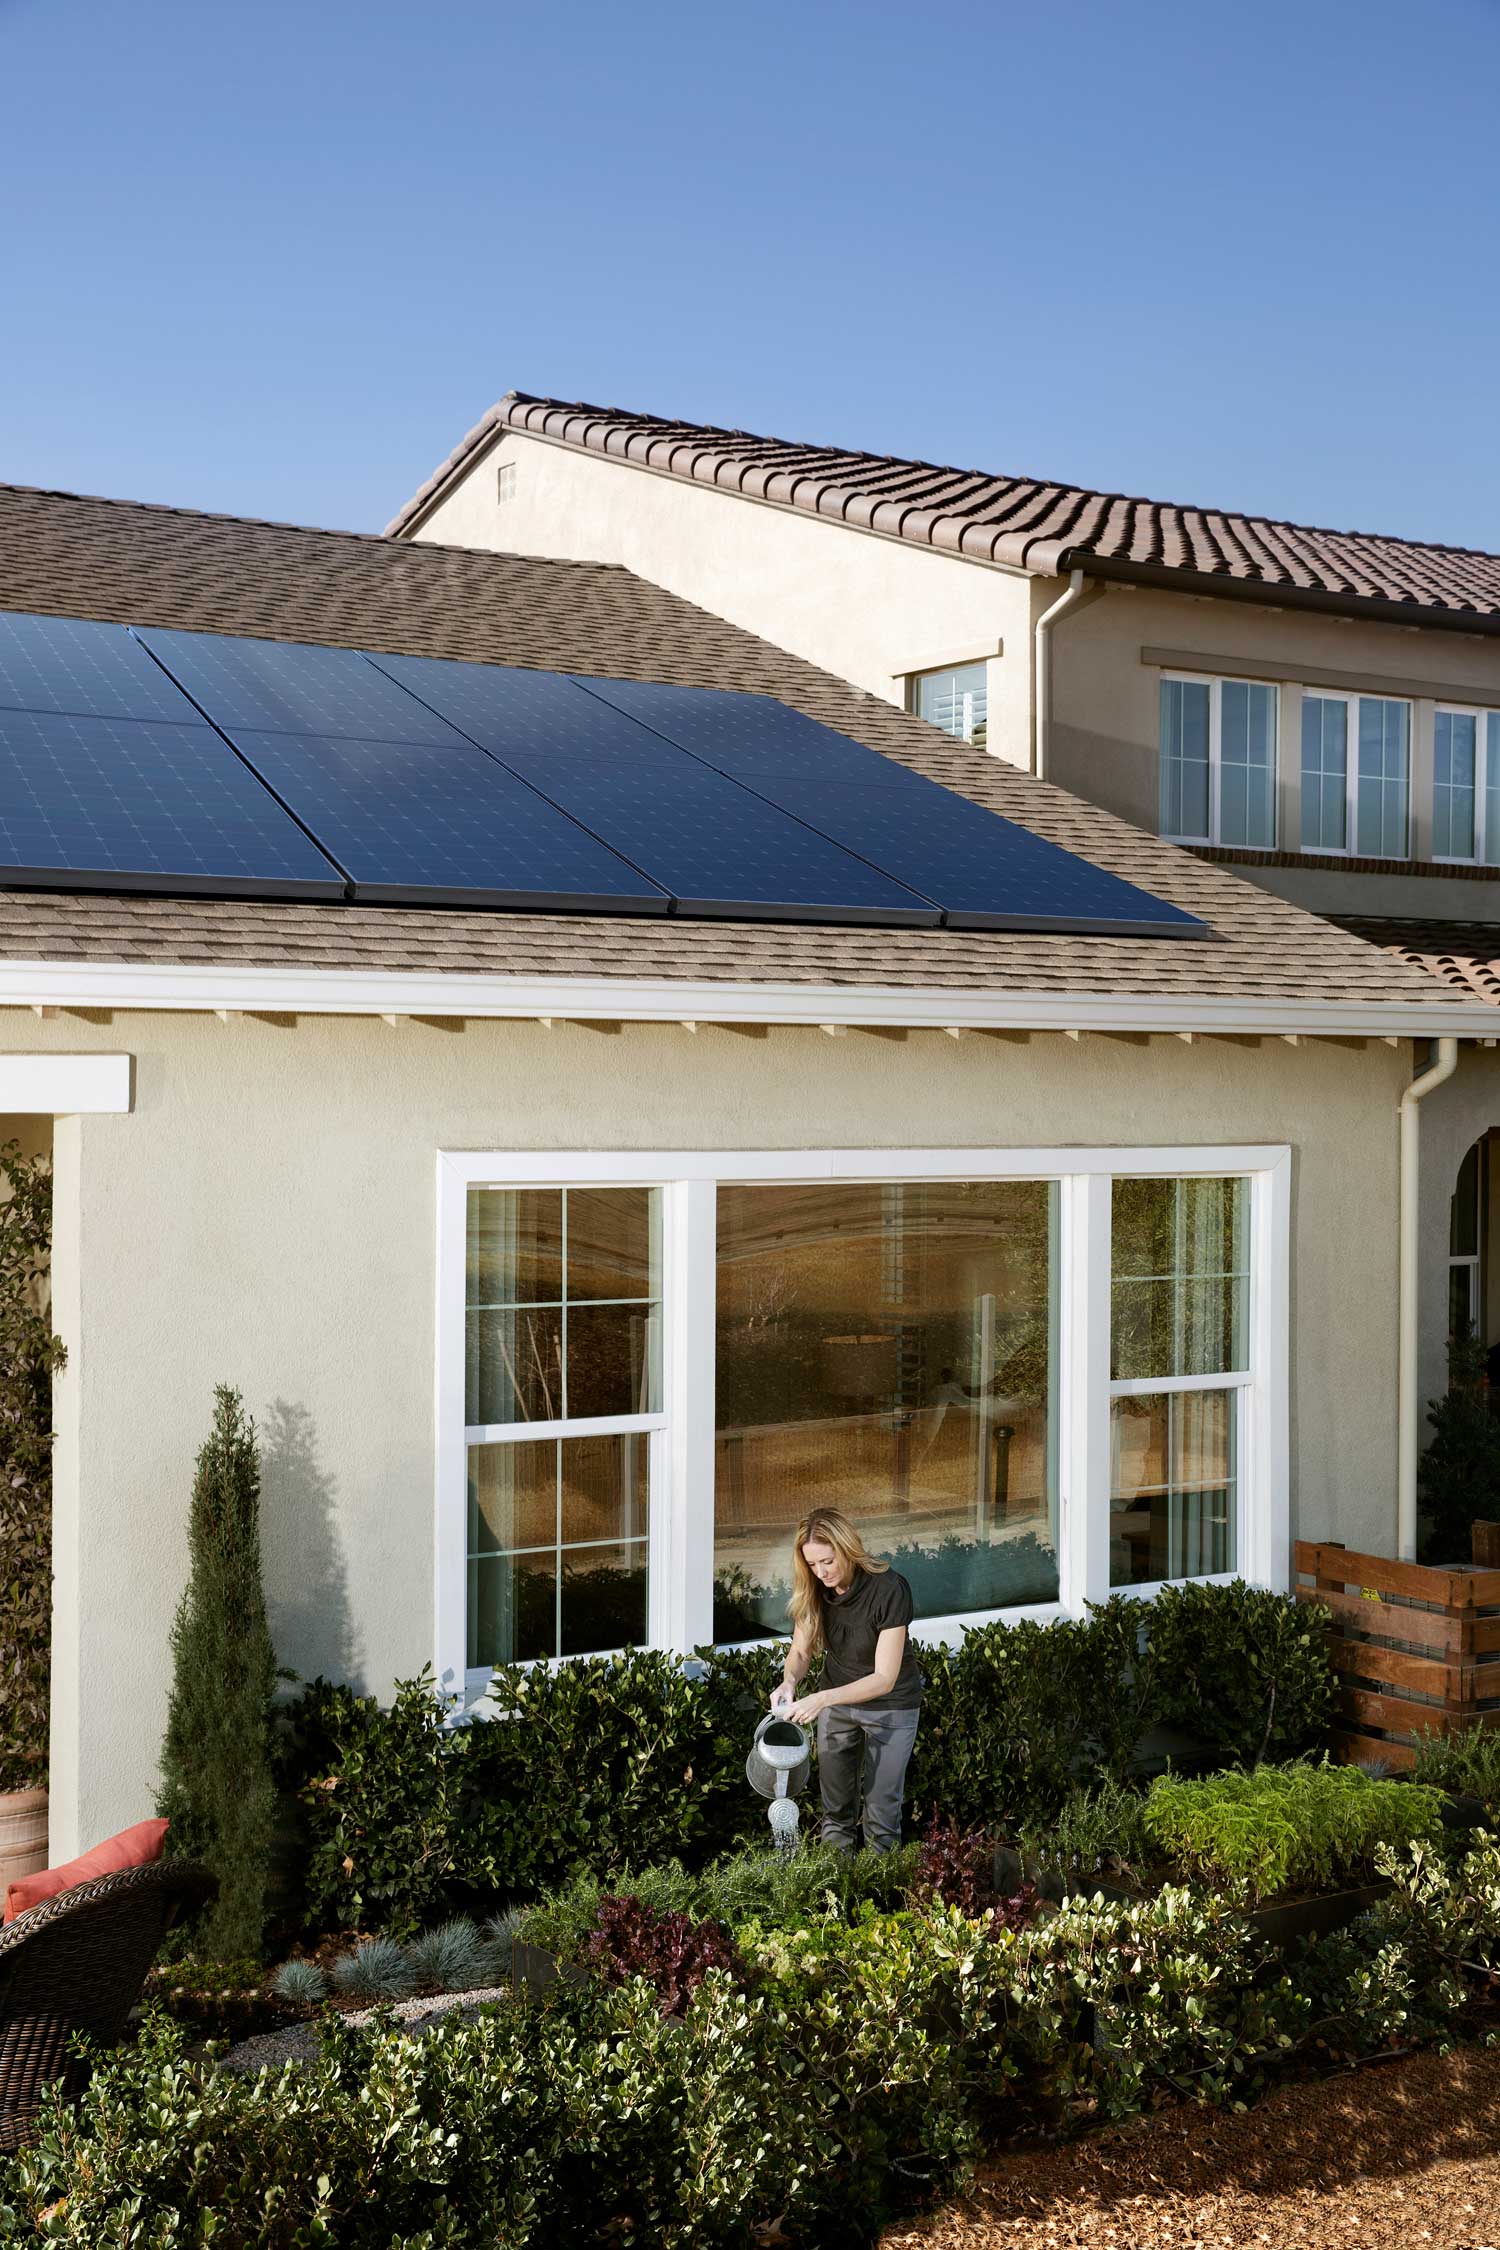 SunPower by Custom Energy is the best company for solar savings in Utah.